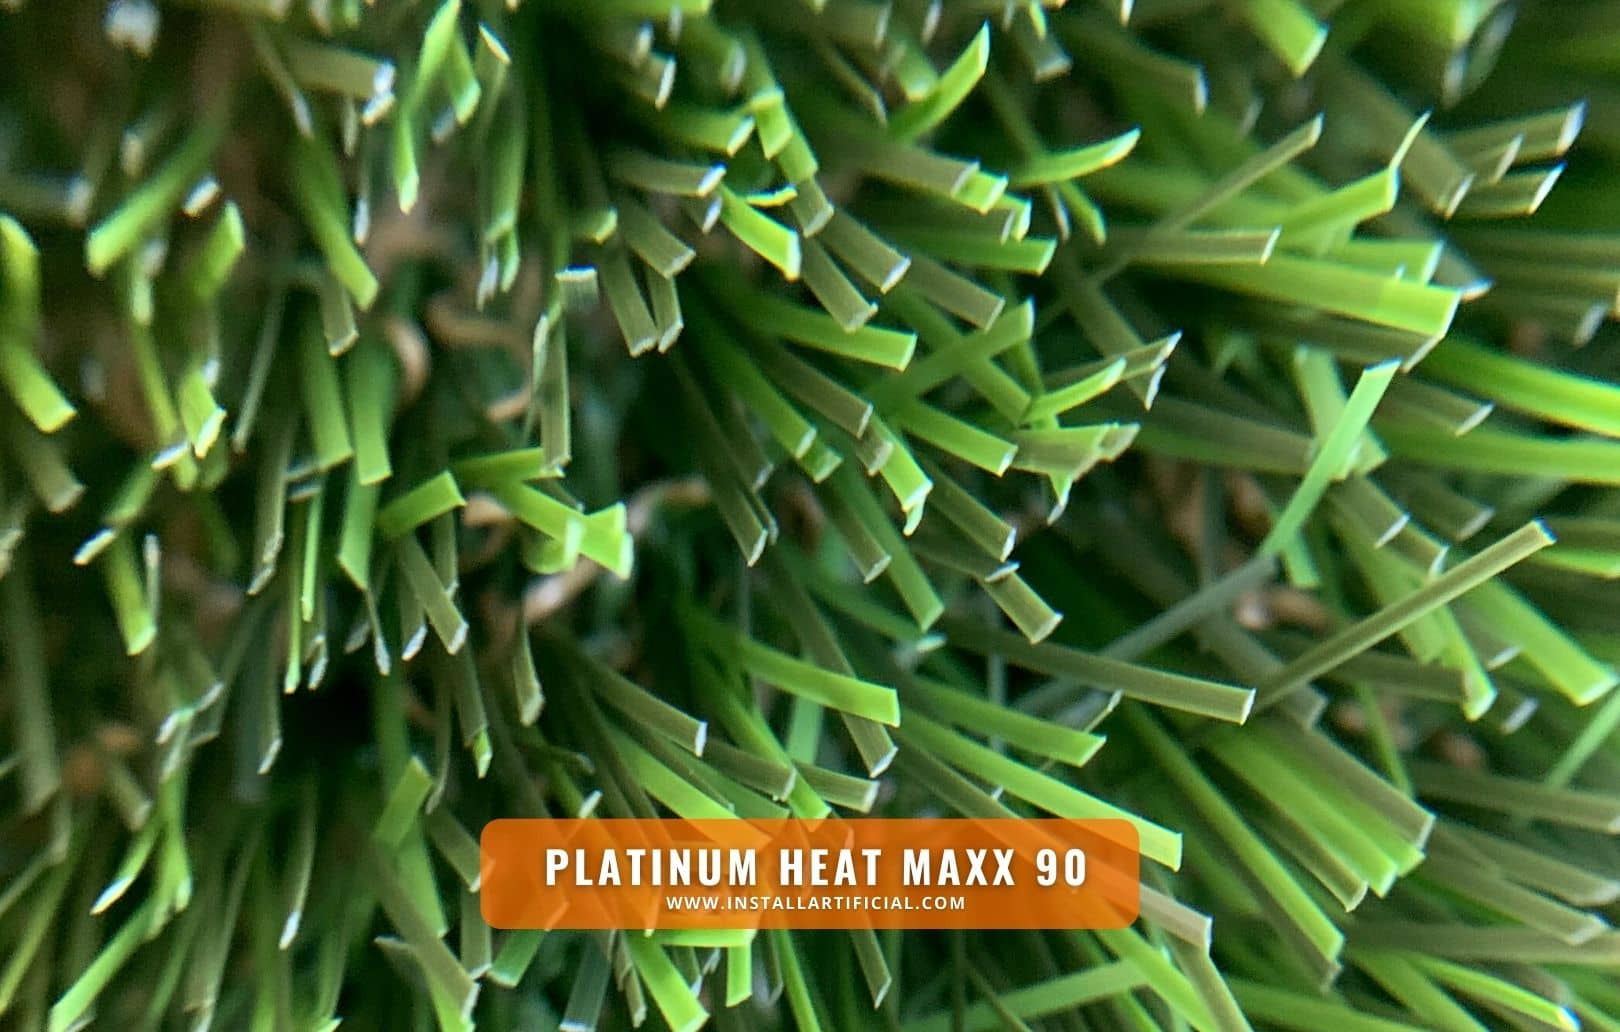 Platinum Heat Maxx 90, Imperial Synthetic Turf, macro